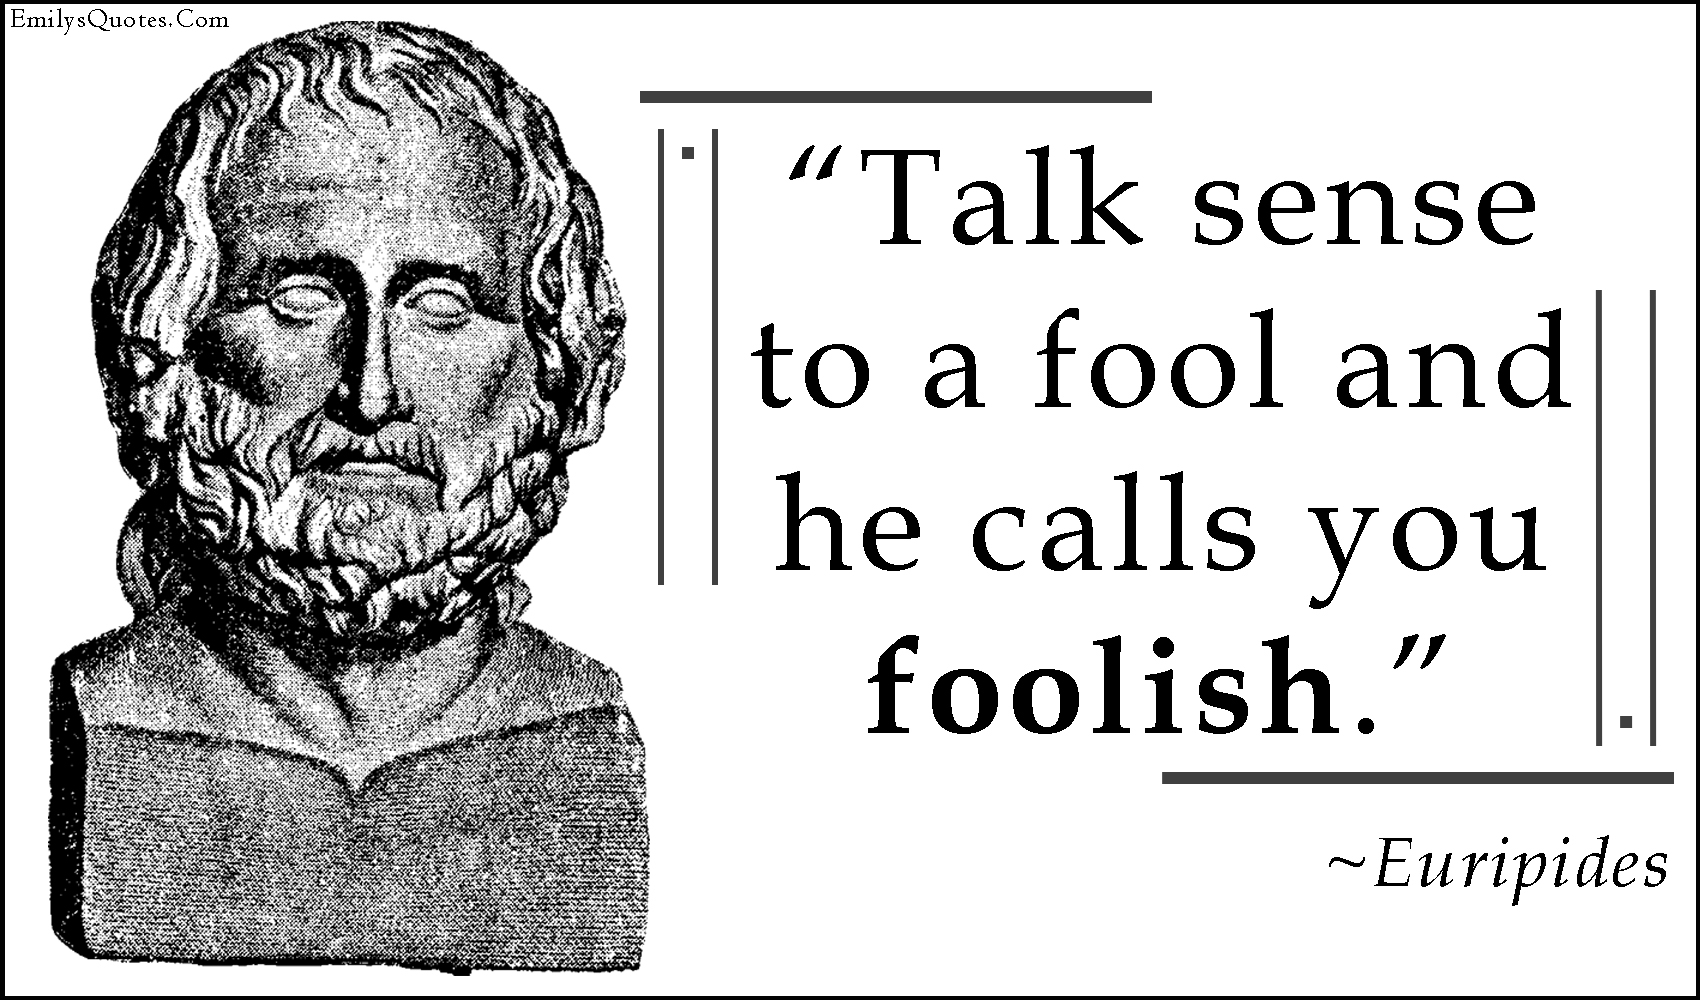 Talk sense to a fool and he calls you foolish